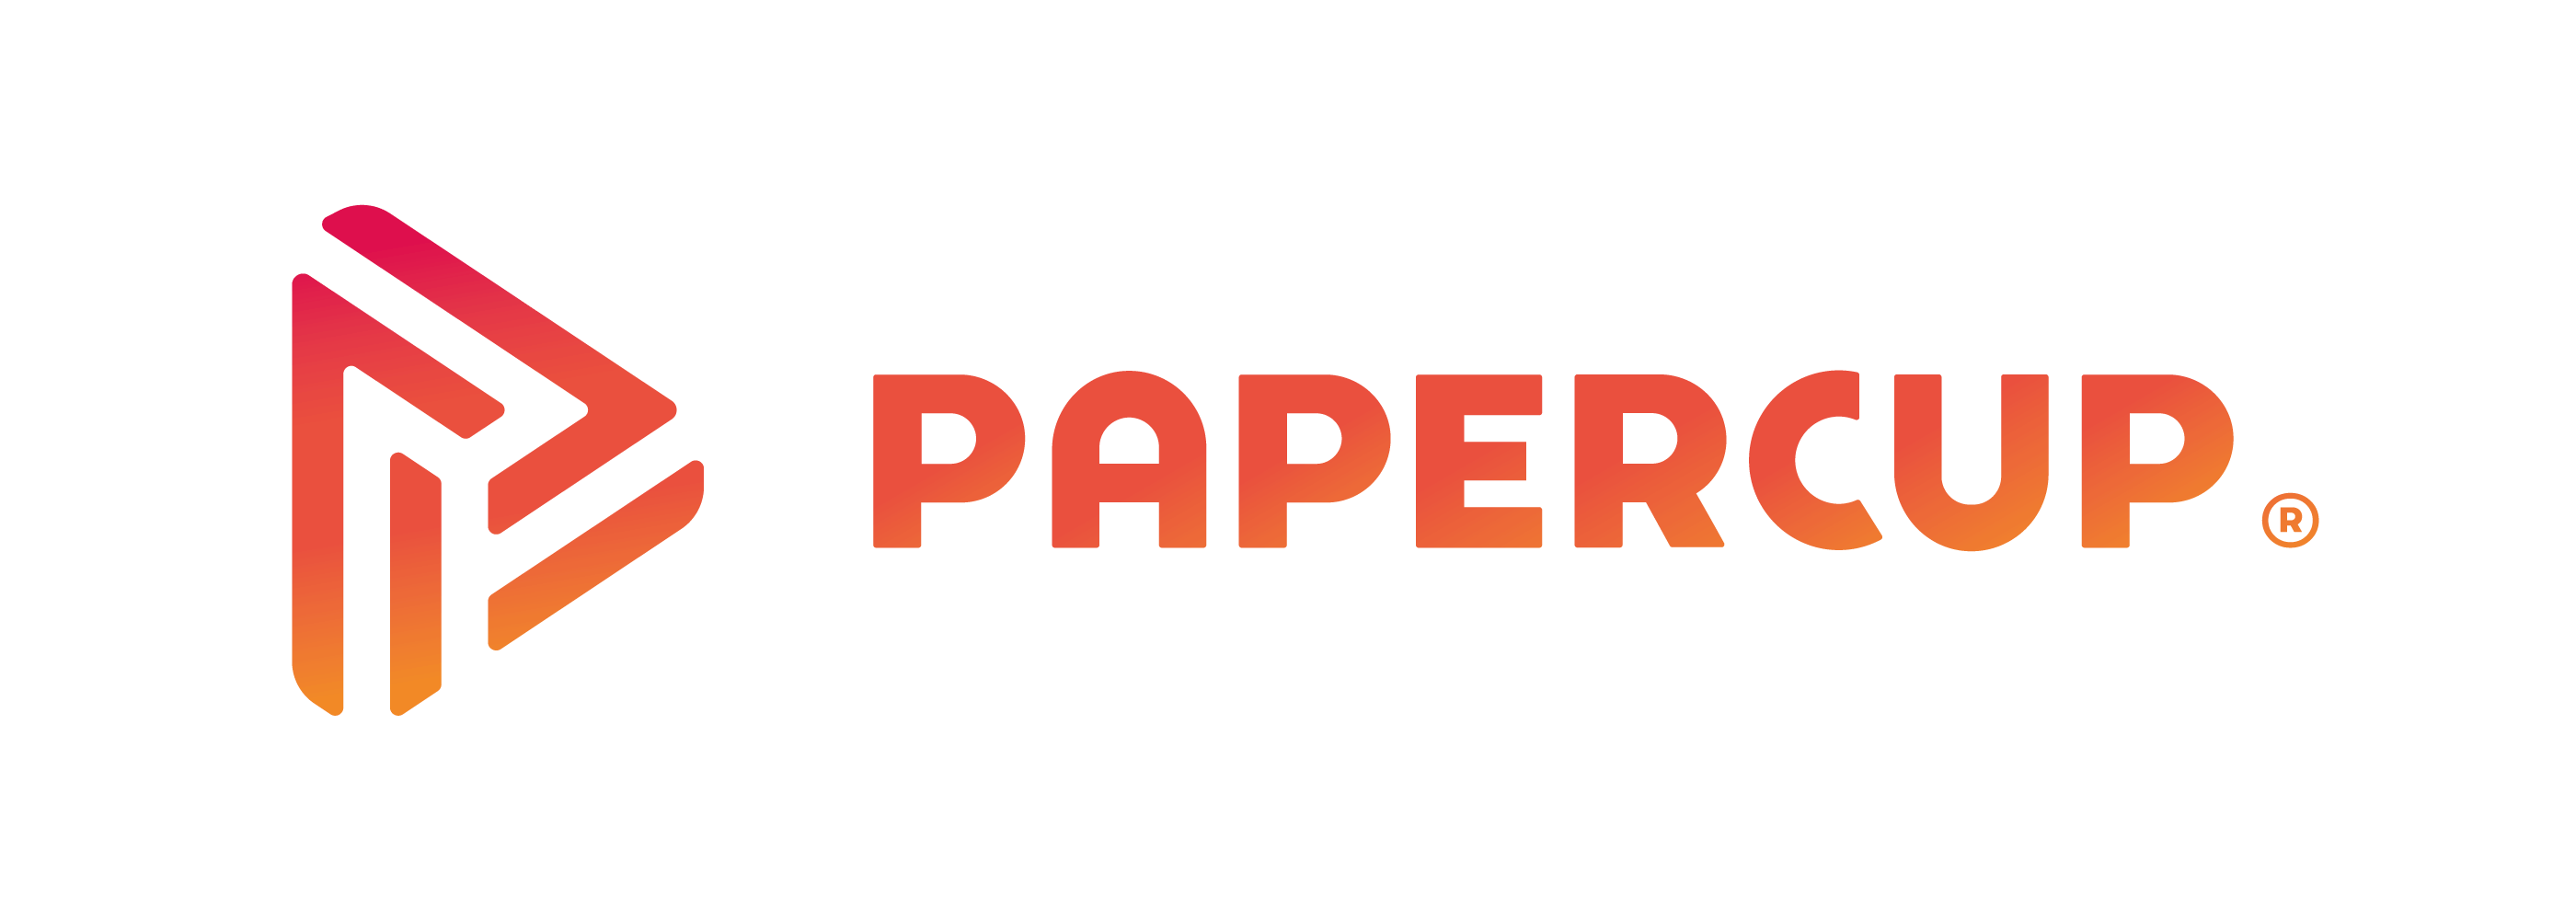 Papercup logo